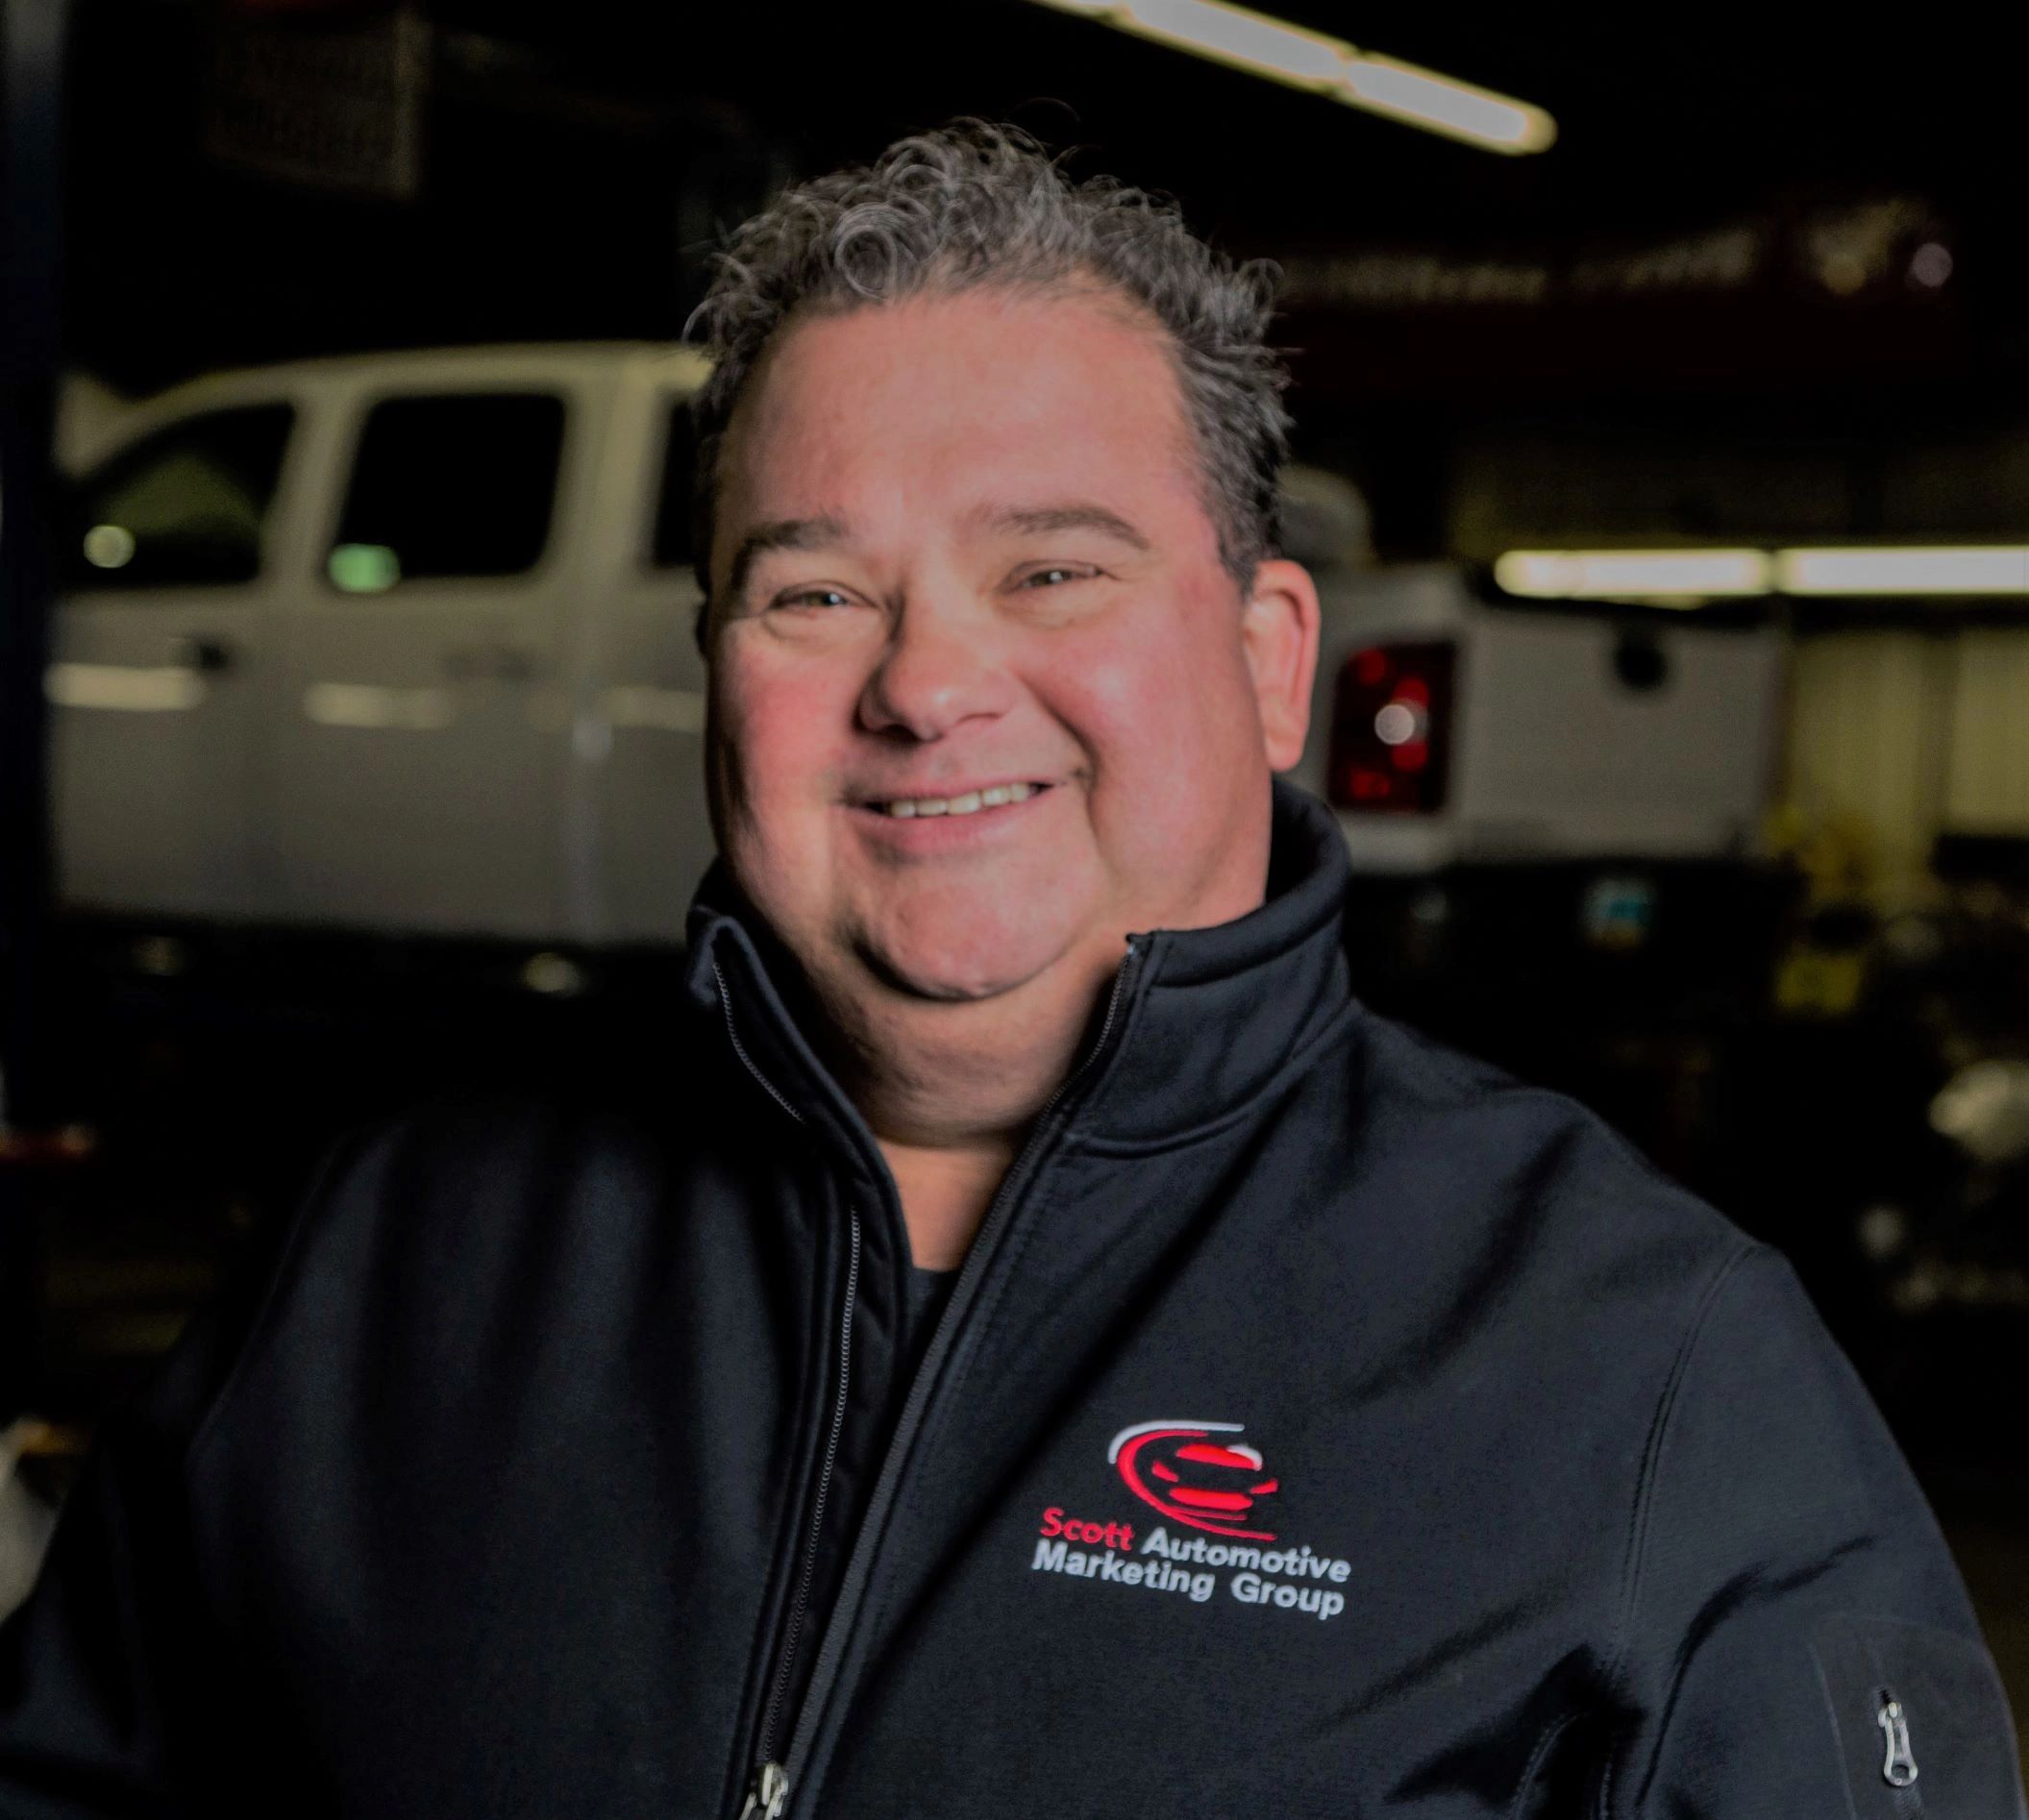 Dave Scott President of the Scott Automotive Marketing Group.